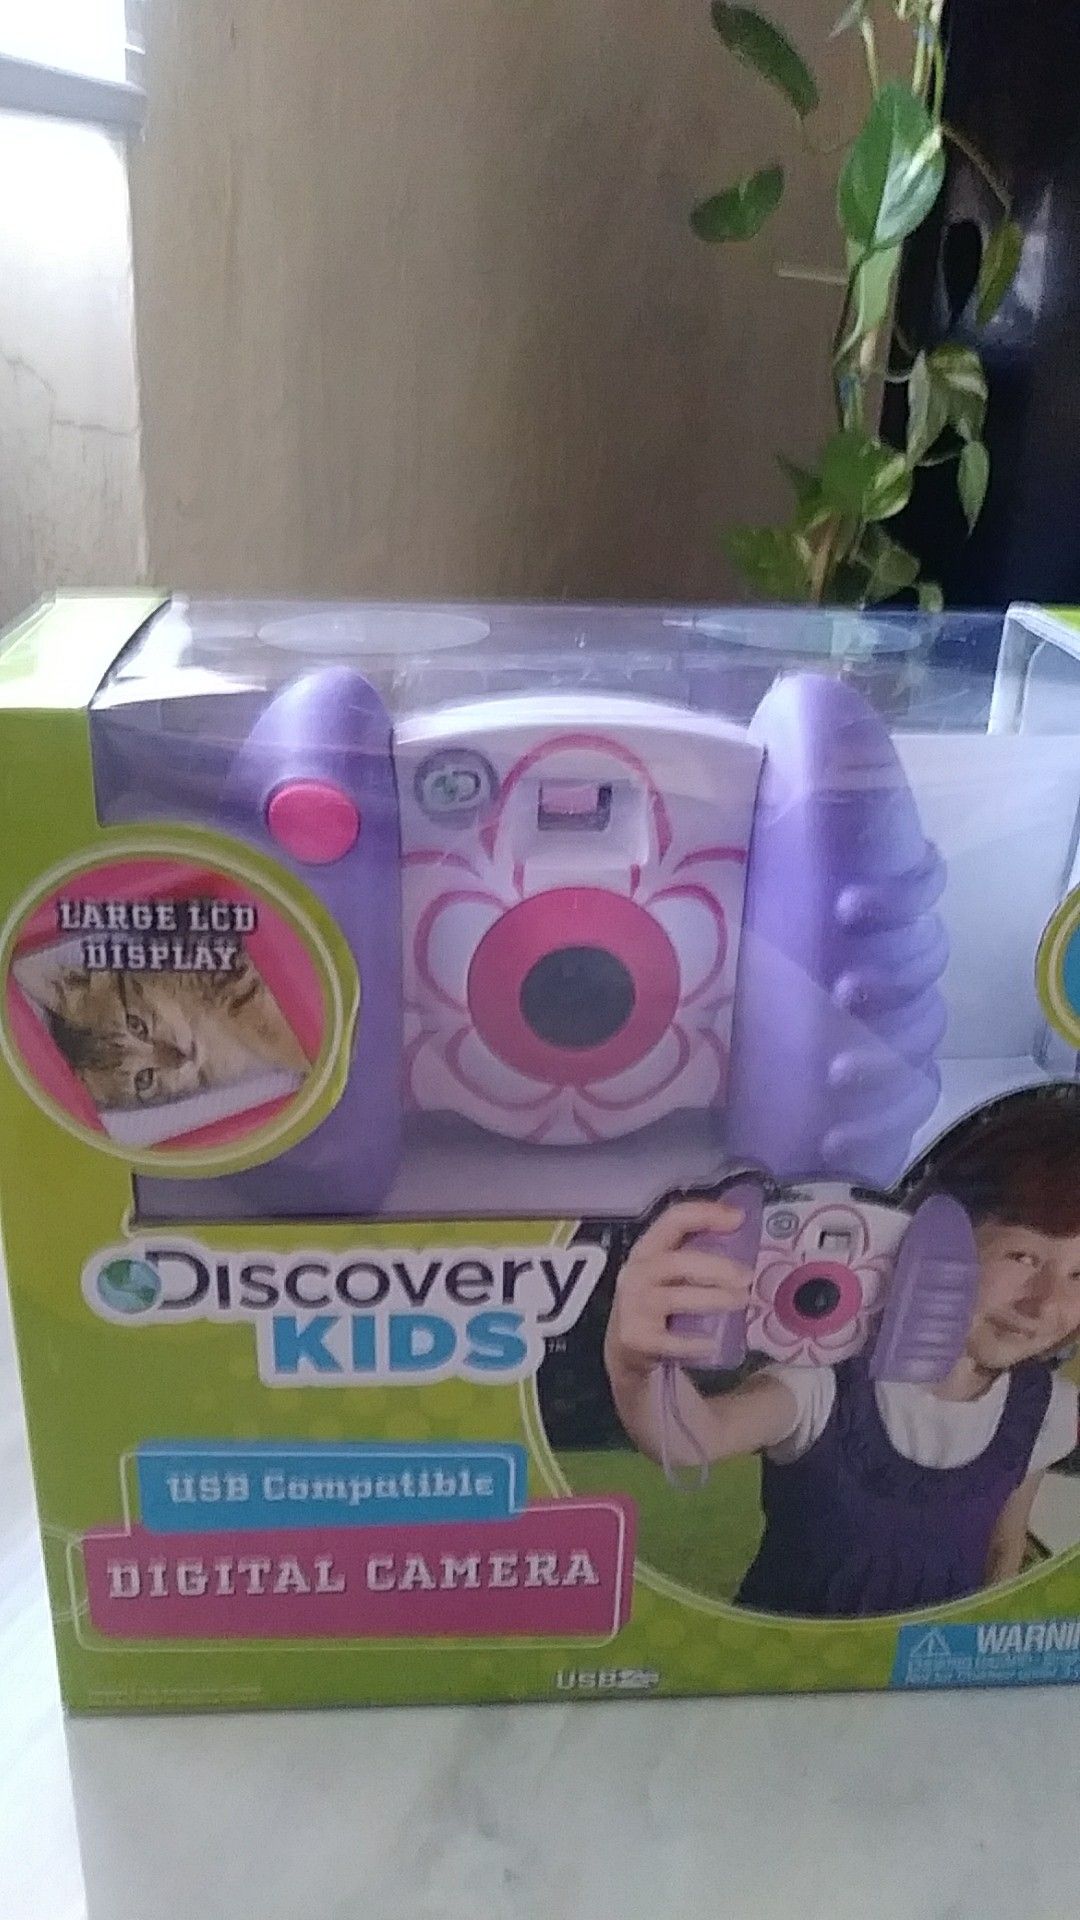 Discovery Kids Digital Camera